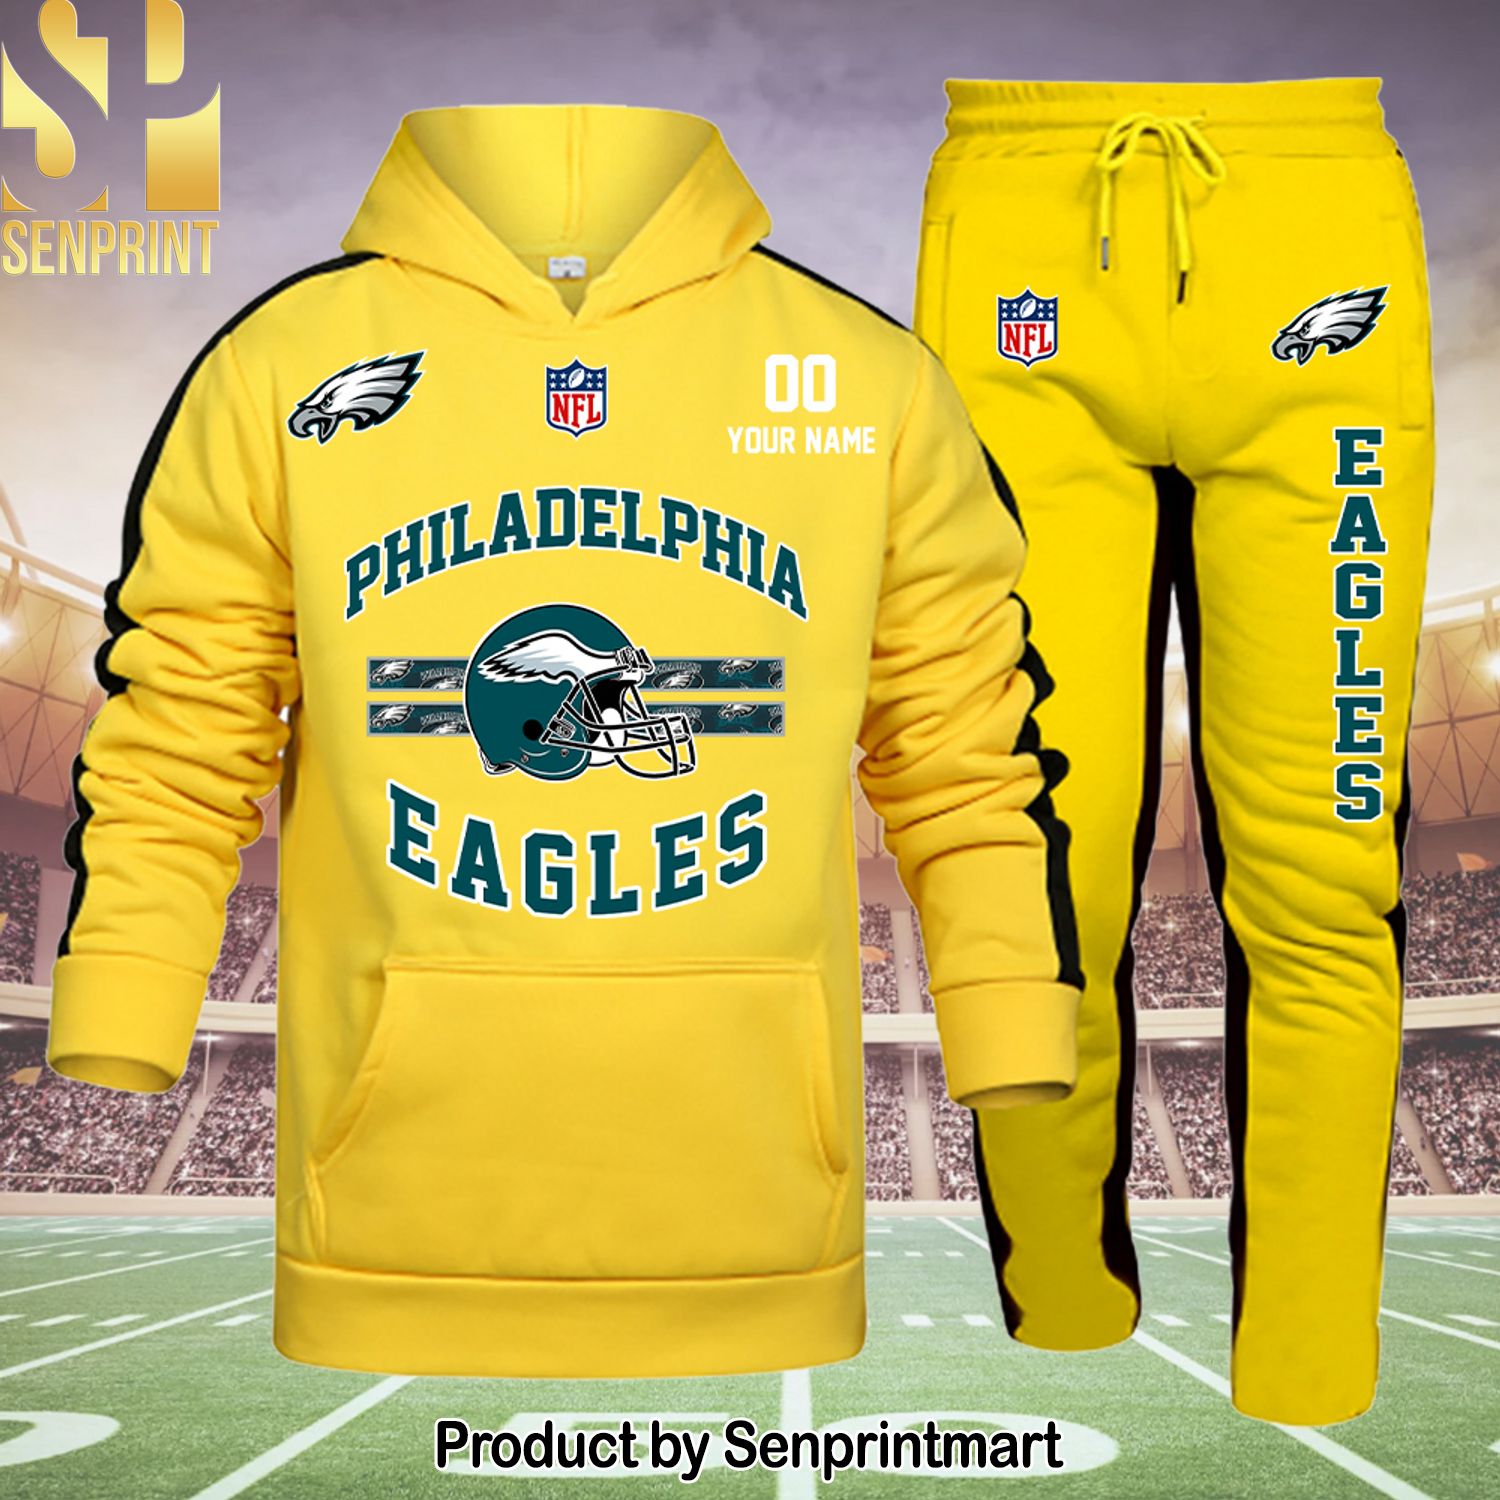 Philadelphia Eagles For Fans Shirt and Pants